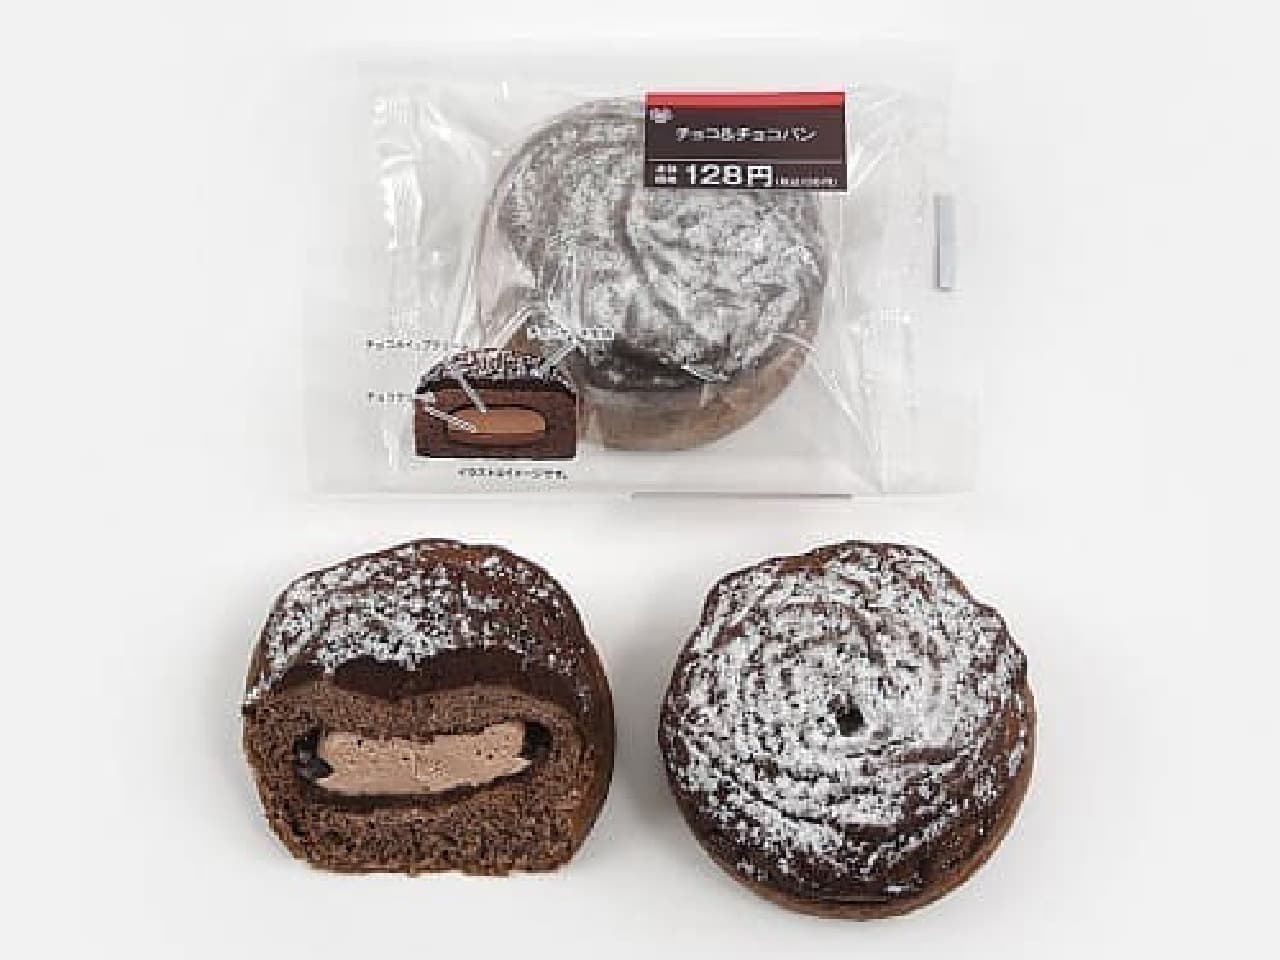 Ministop "Chocolate & Chocolate Bread"